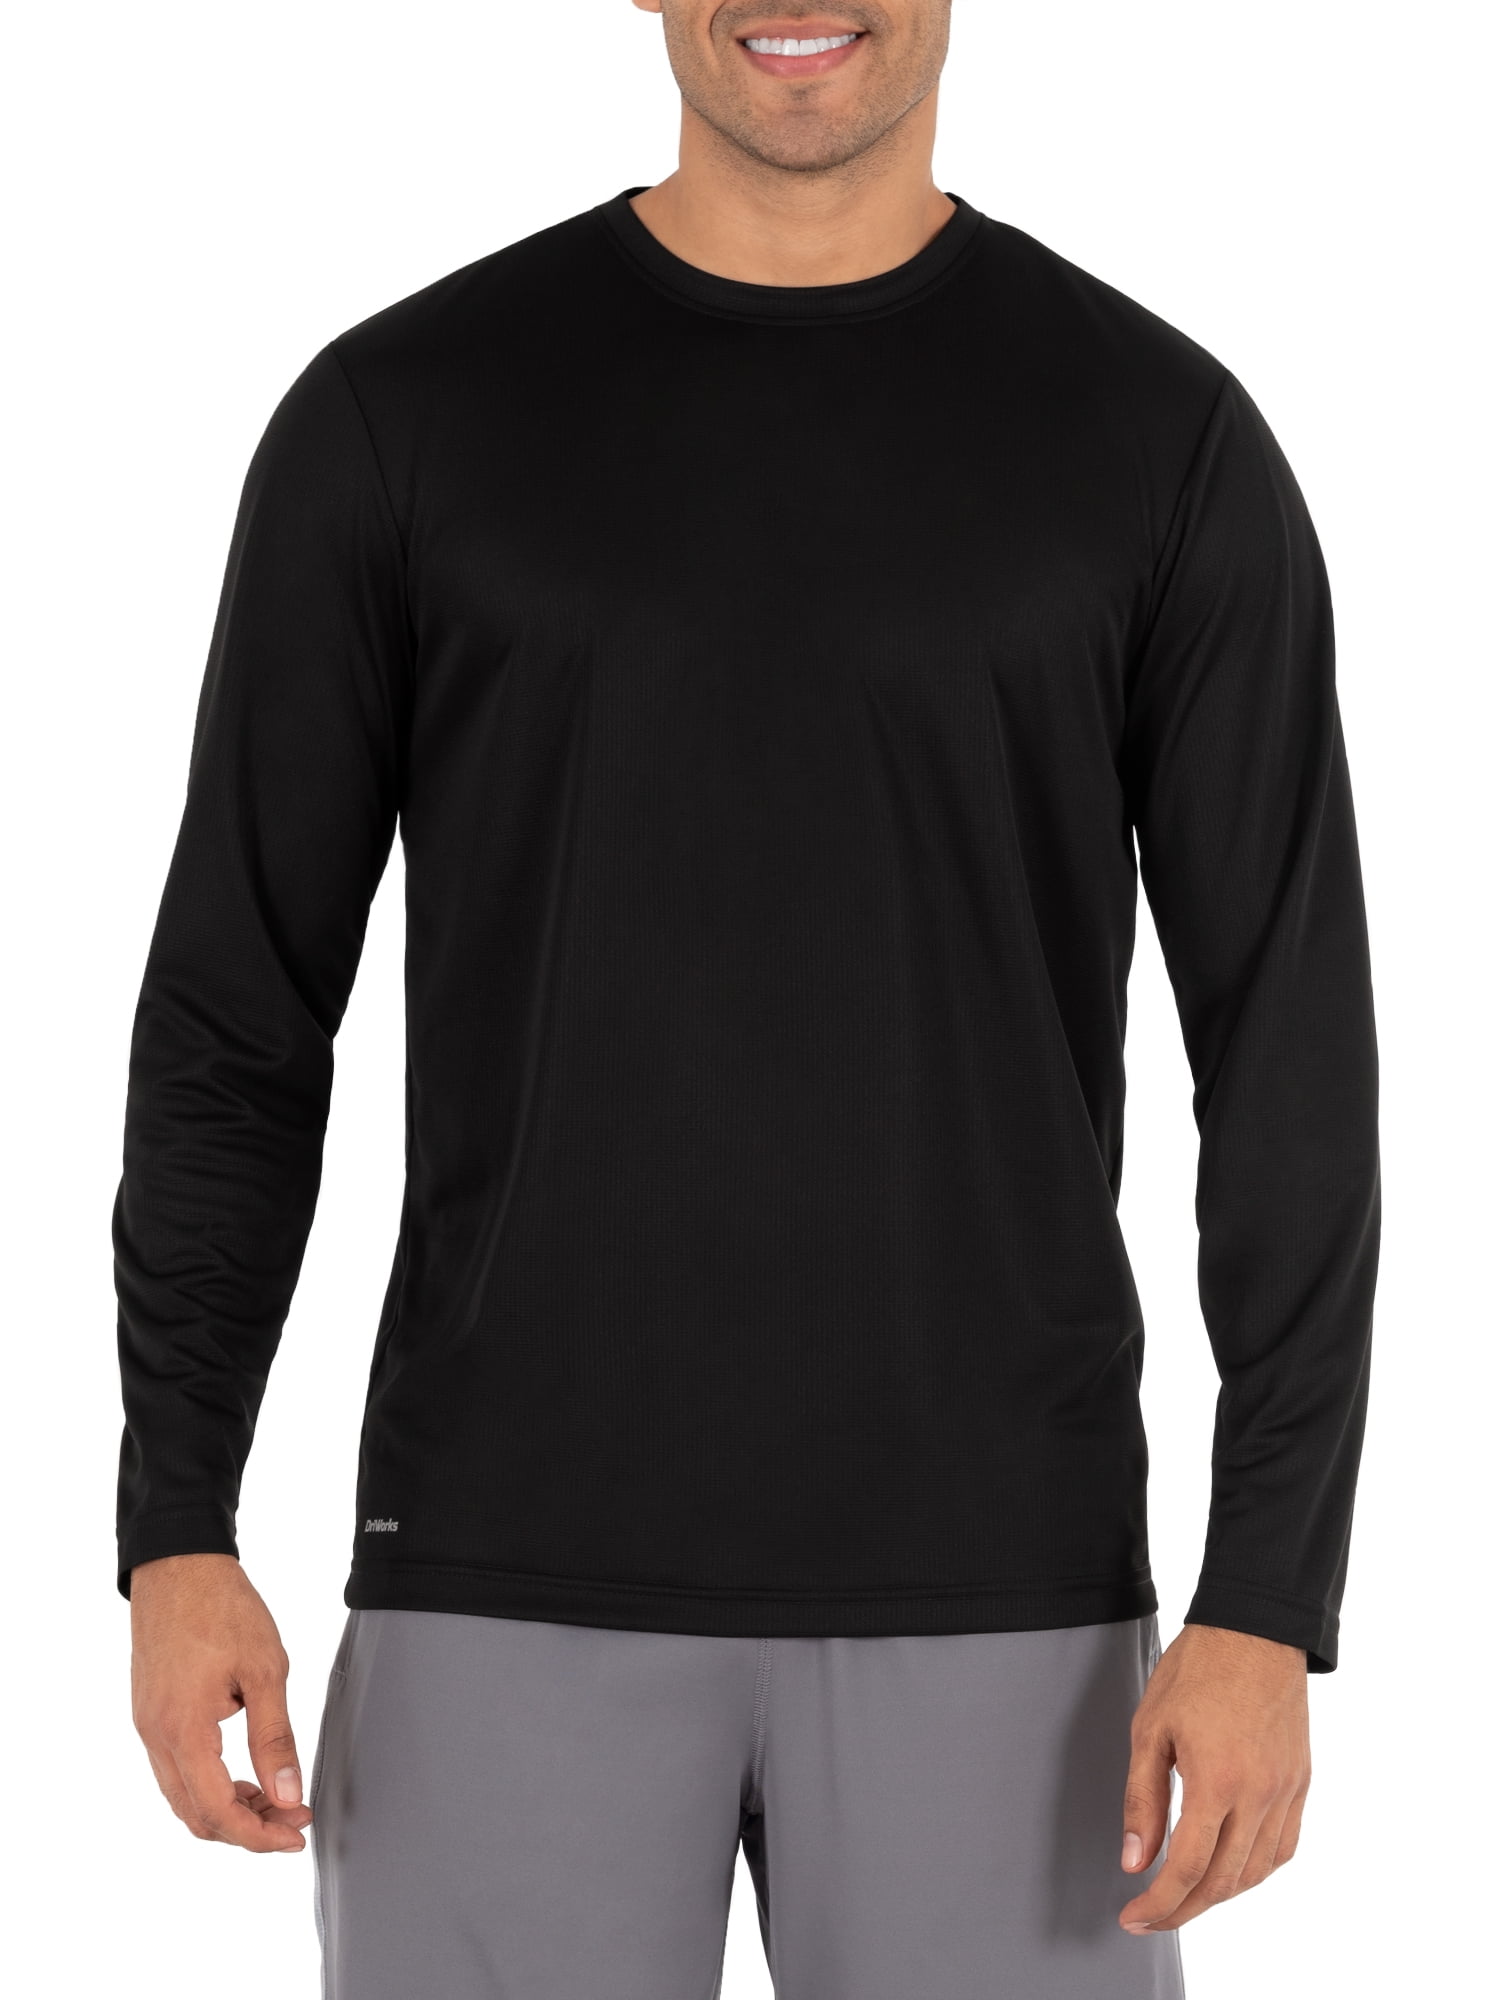 Men BigBoy 4-Pack Premium Casual Sport Work Cotton Long Sleeve Crew Neck T-Shirt Sweatshirt